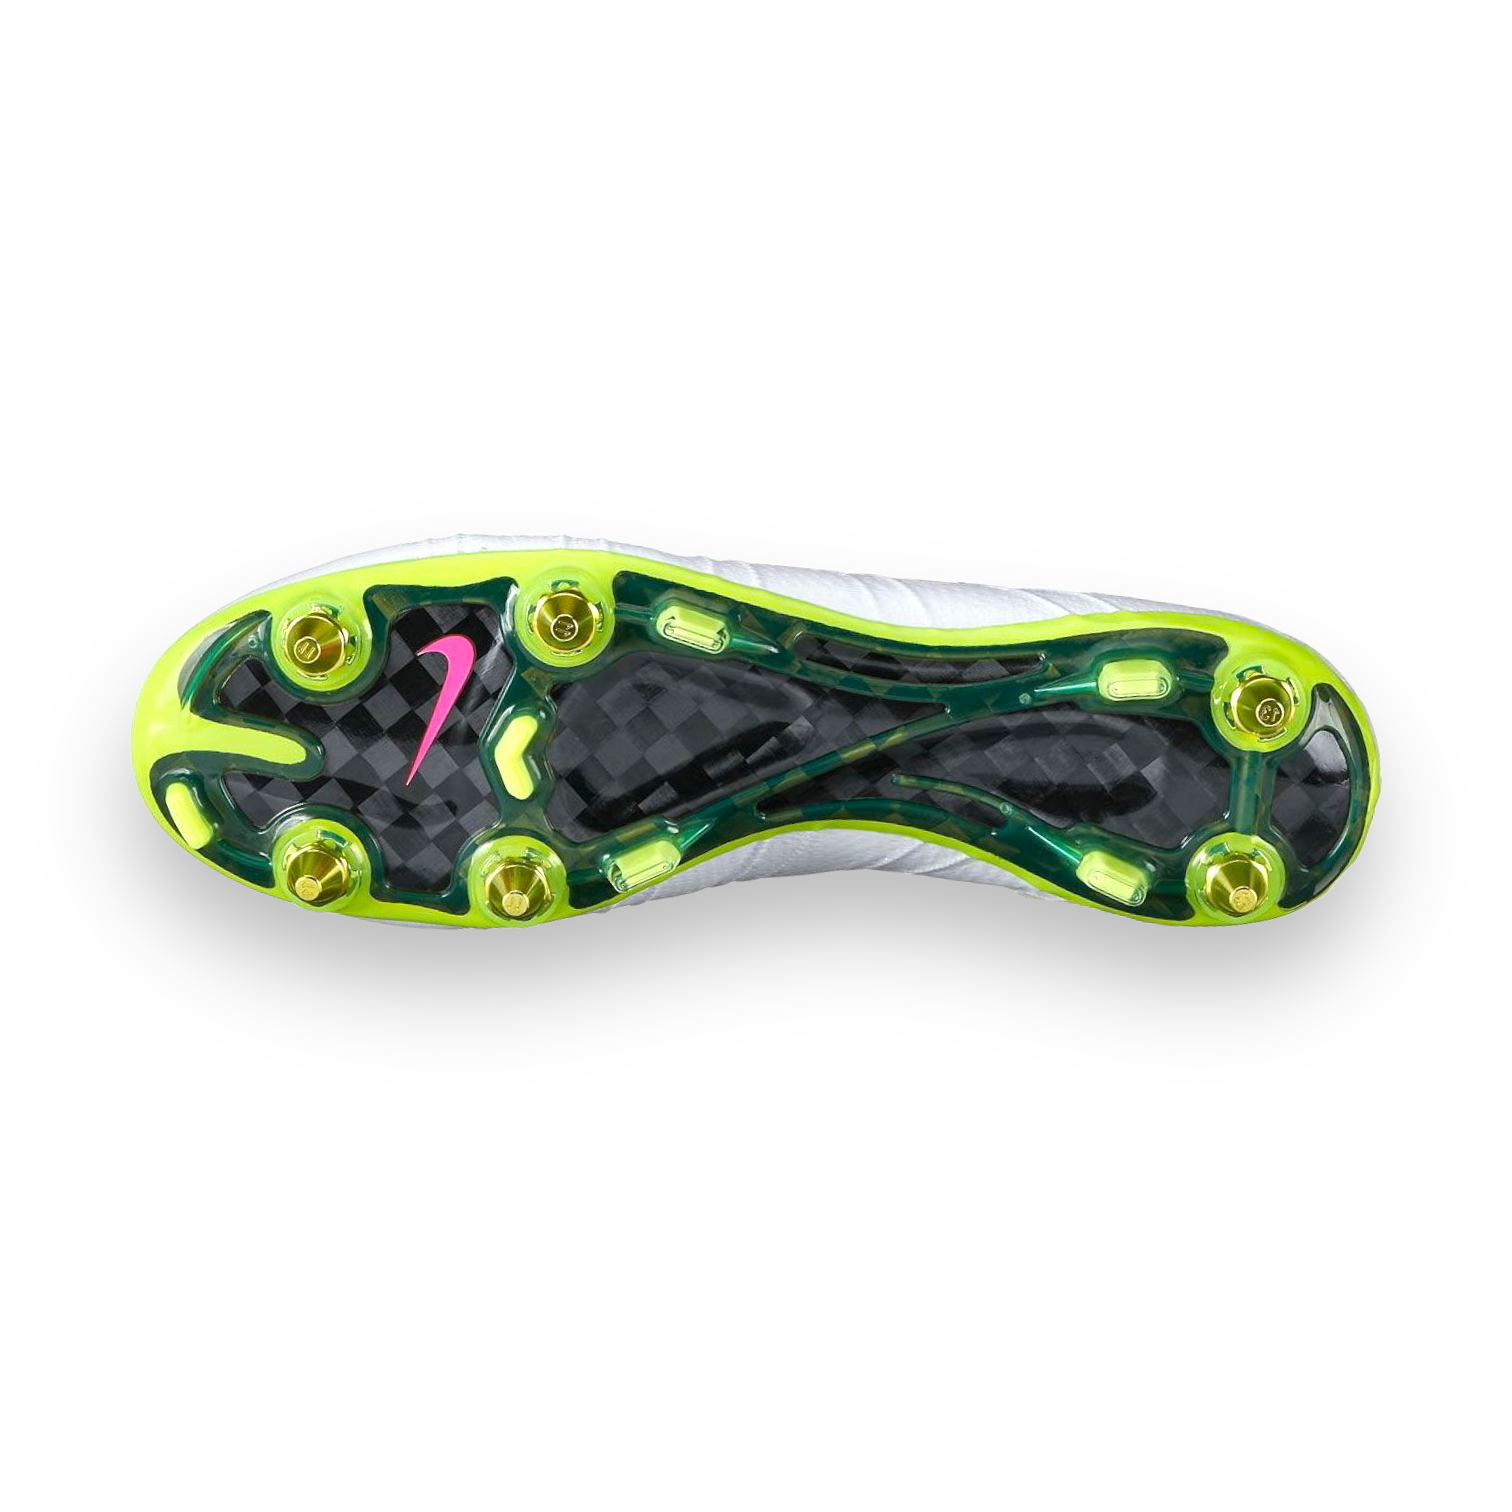 Fuerza detalles simpático Nike Mercurial Superfly IV SG-Pro 170